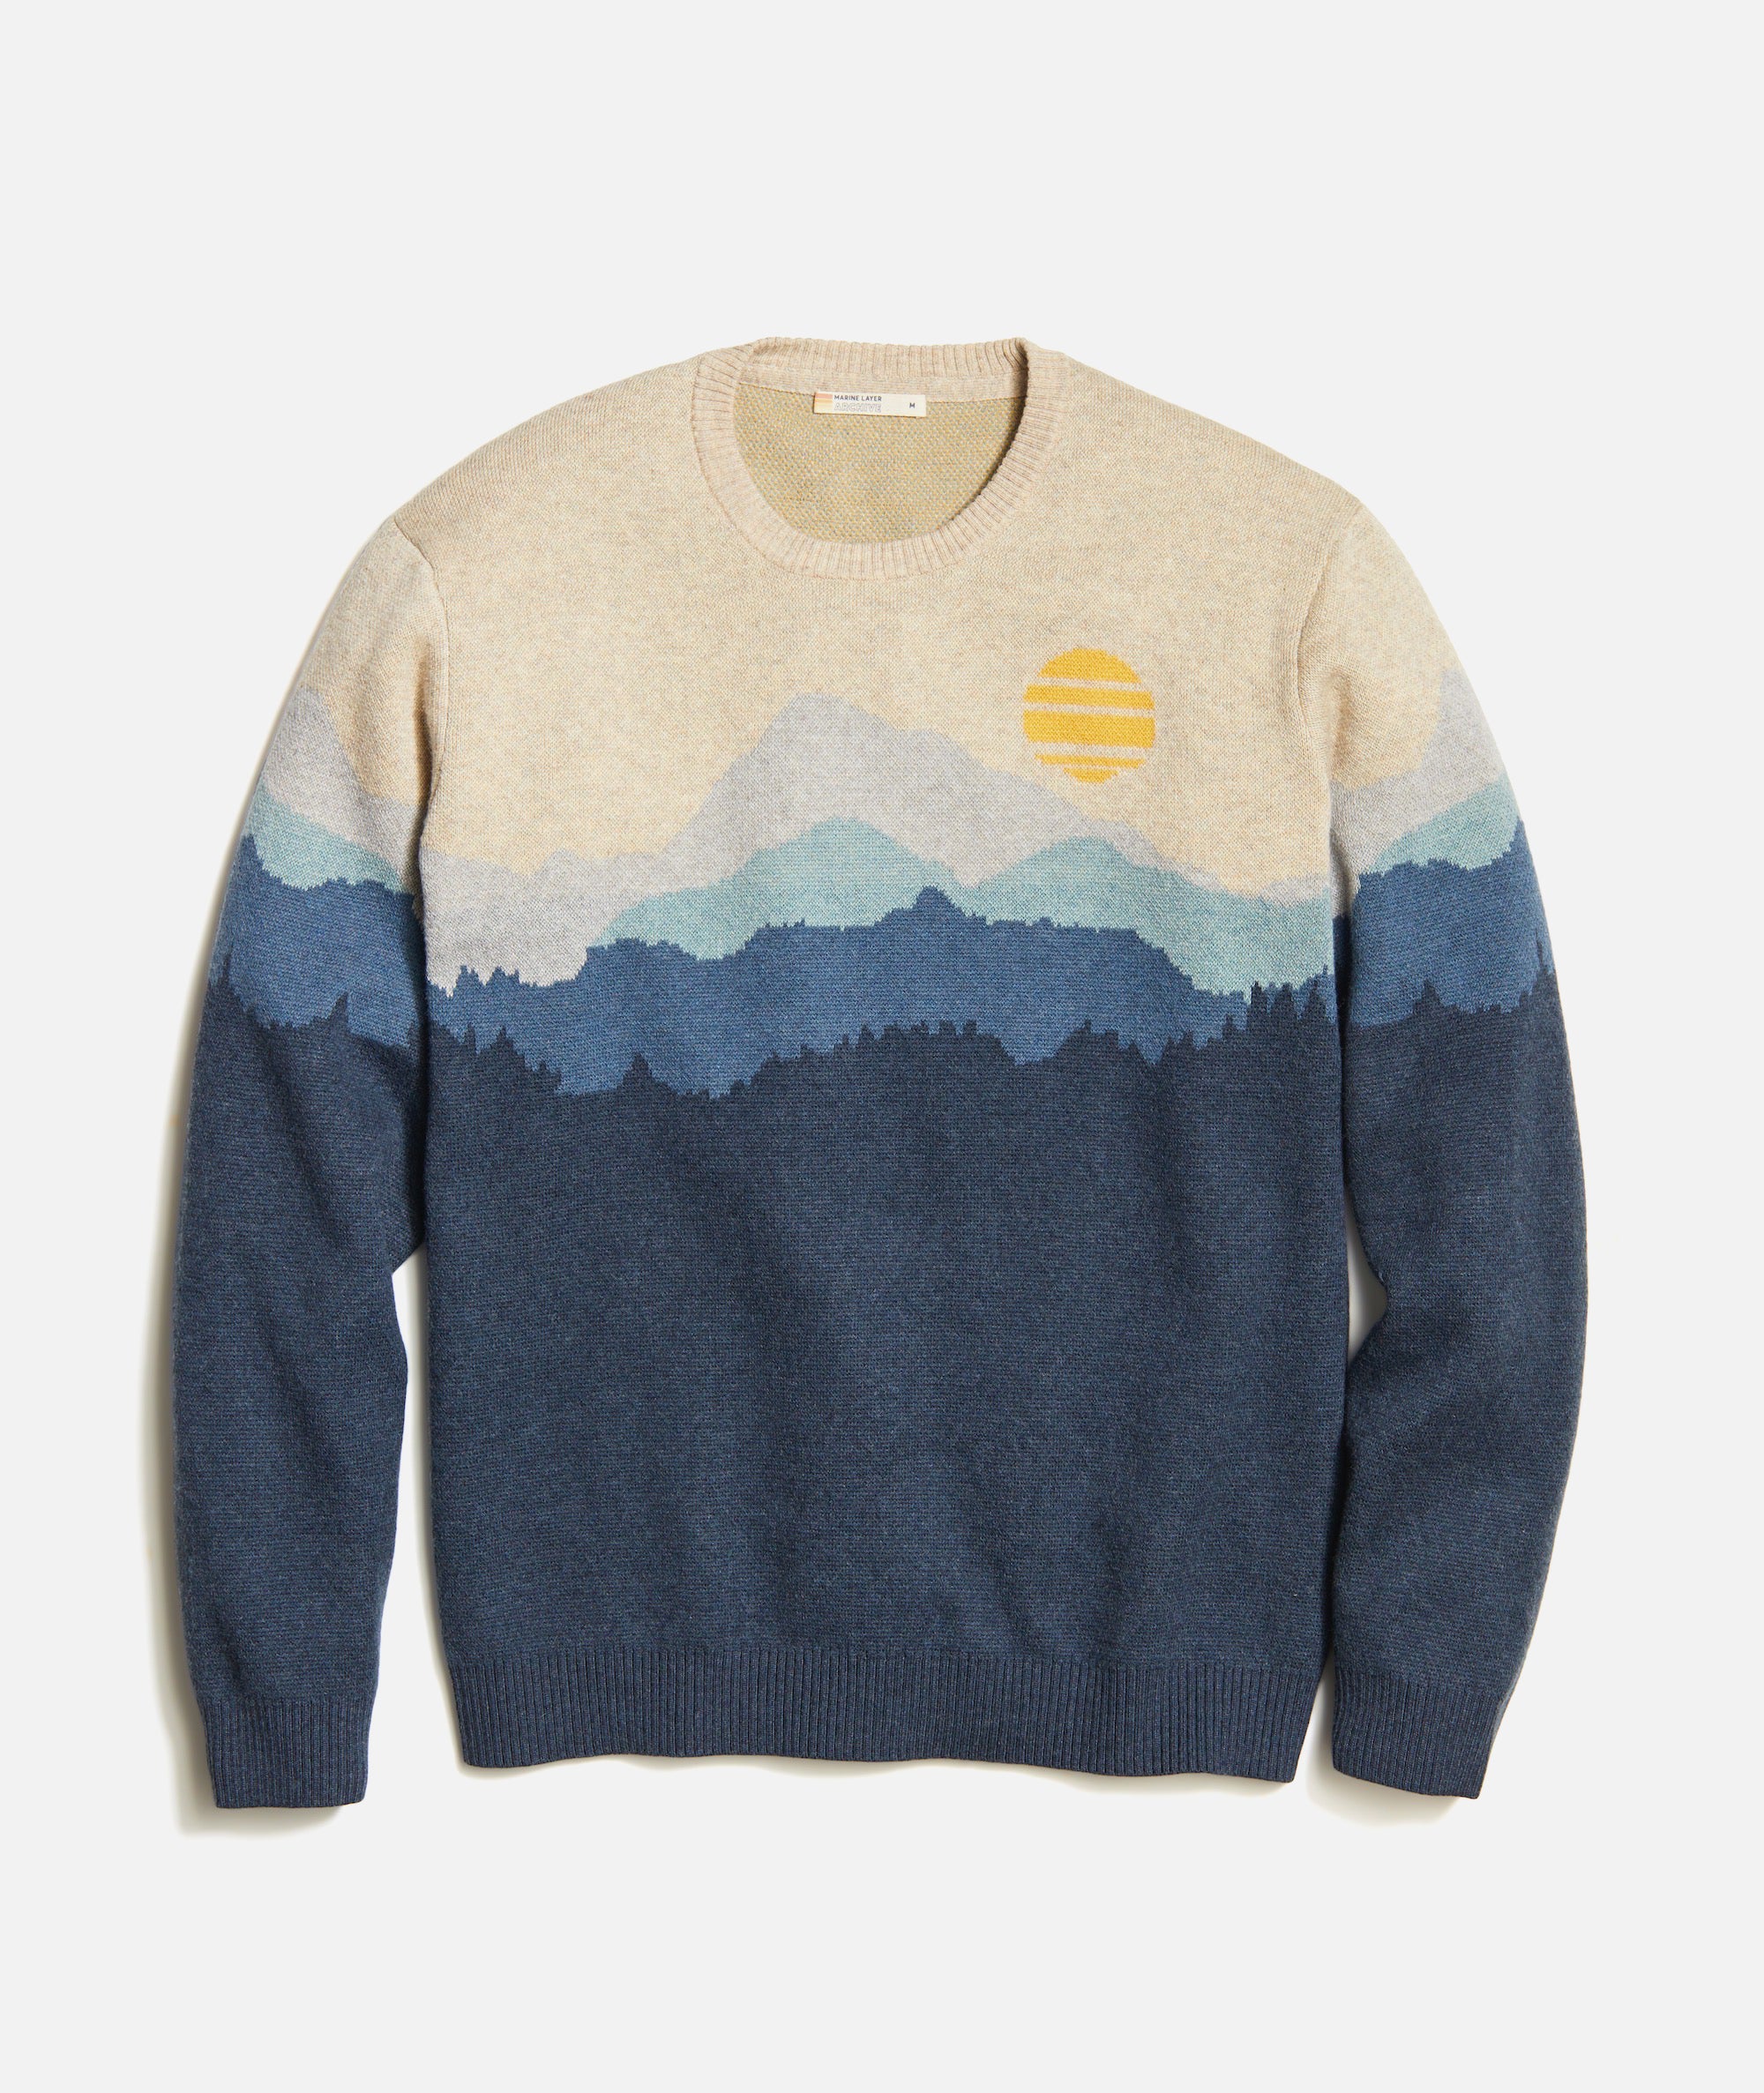 Sweater Archive Layer – Calama Marine